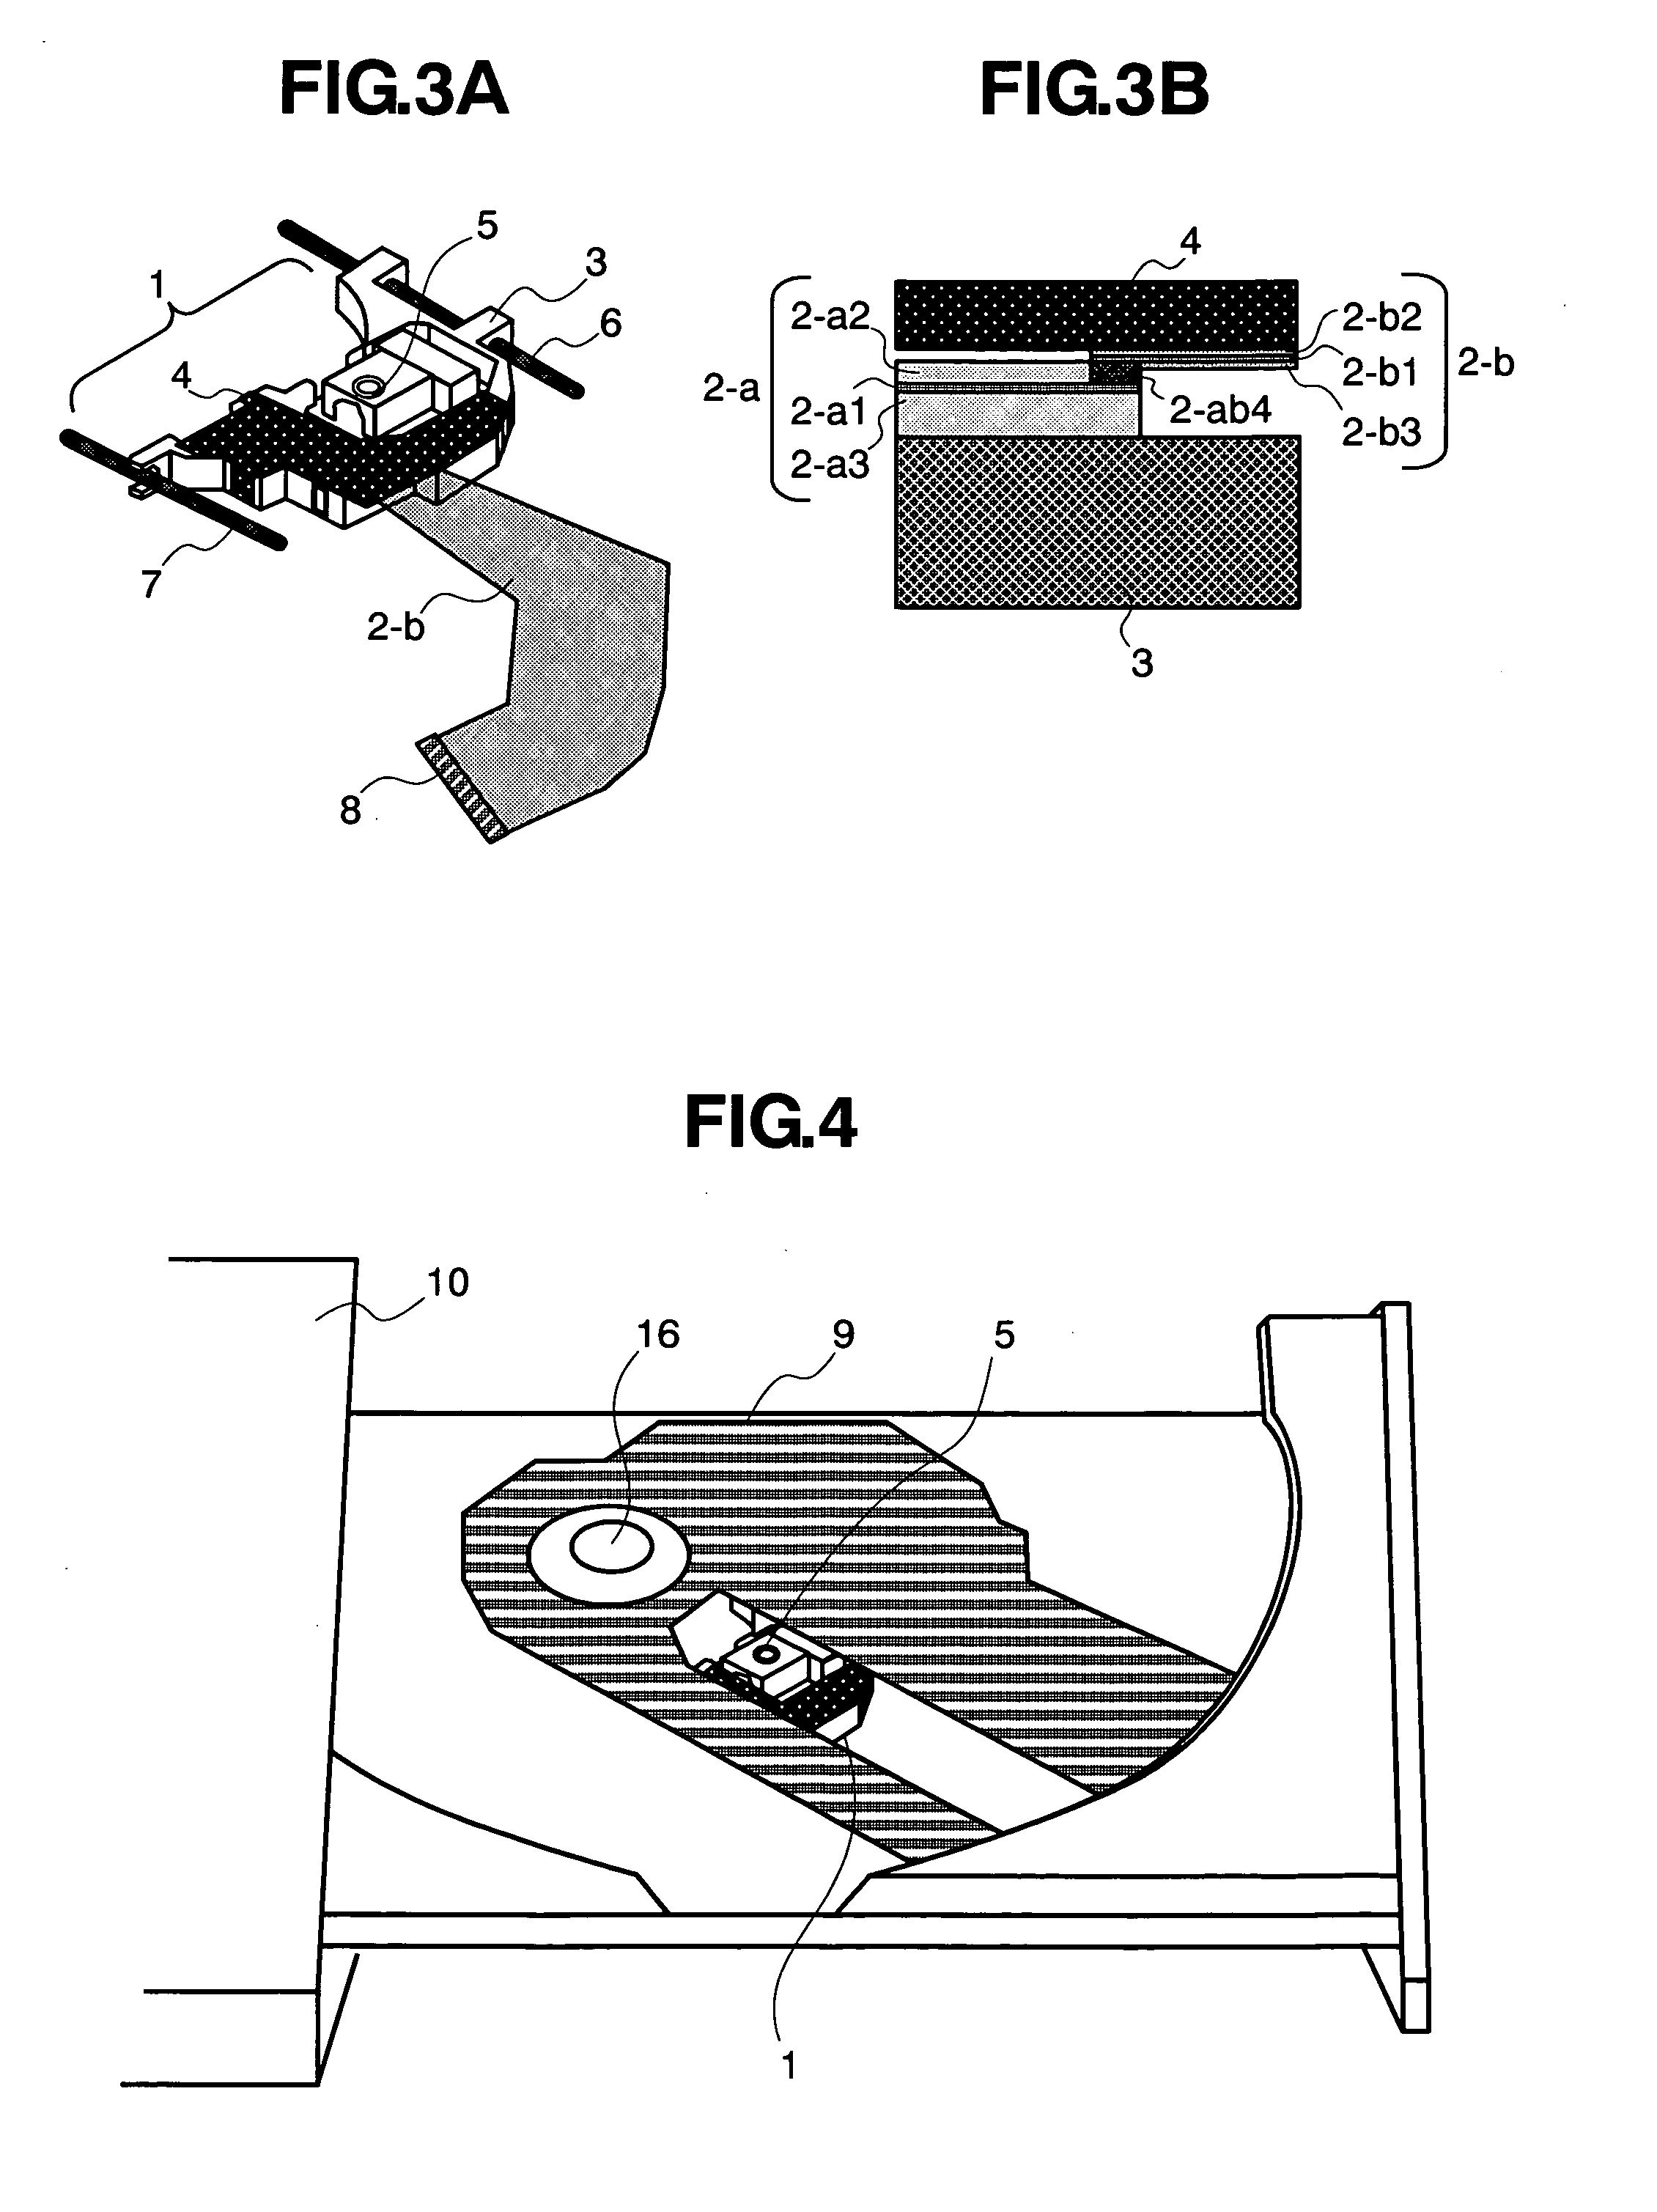 Optical disk drive apparatus